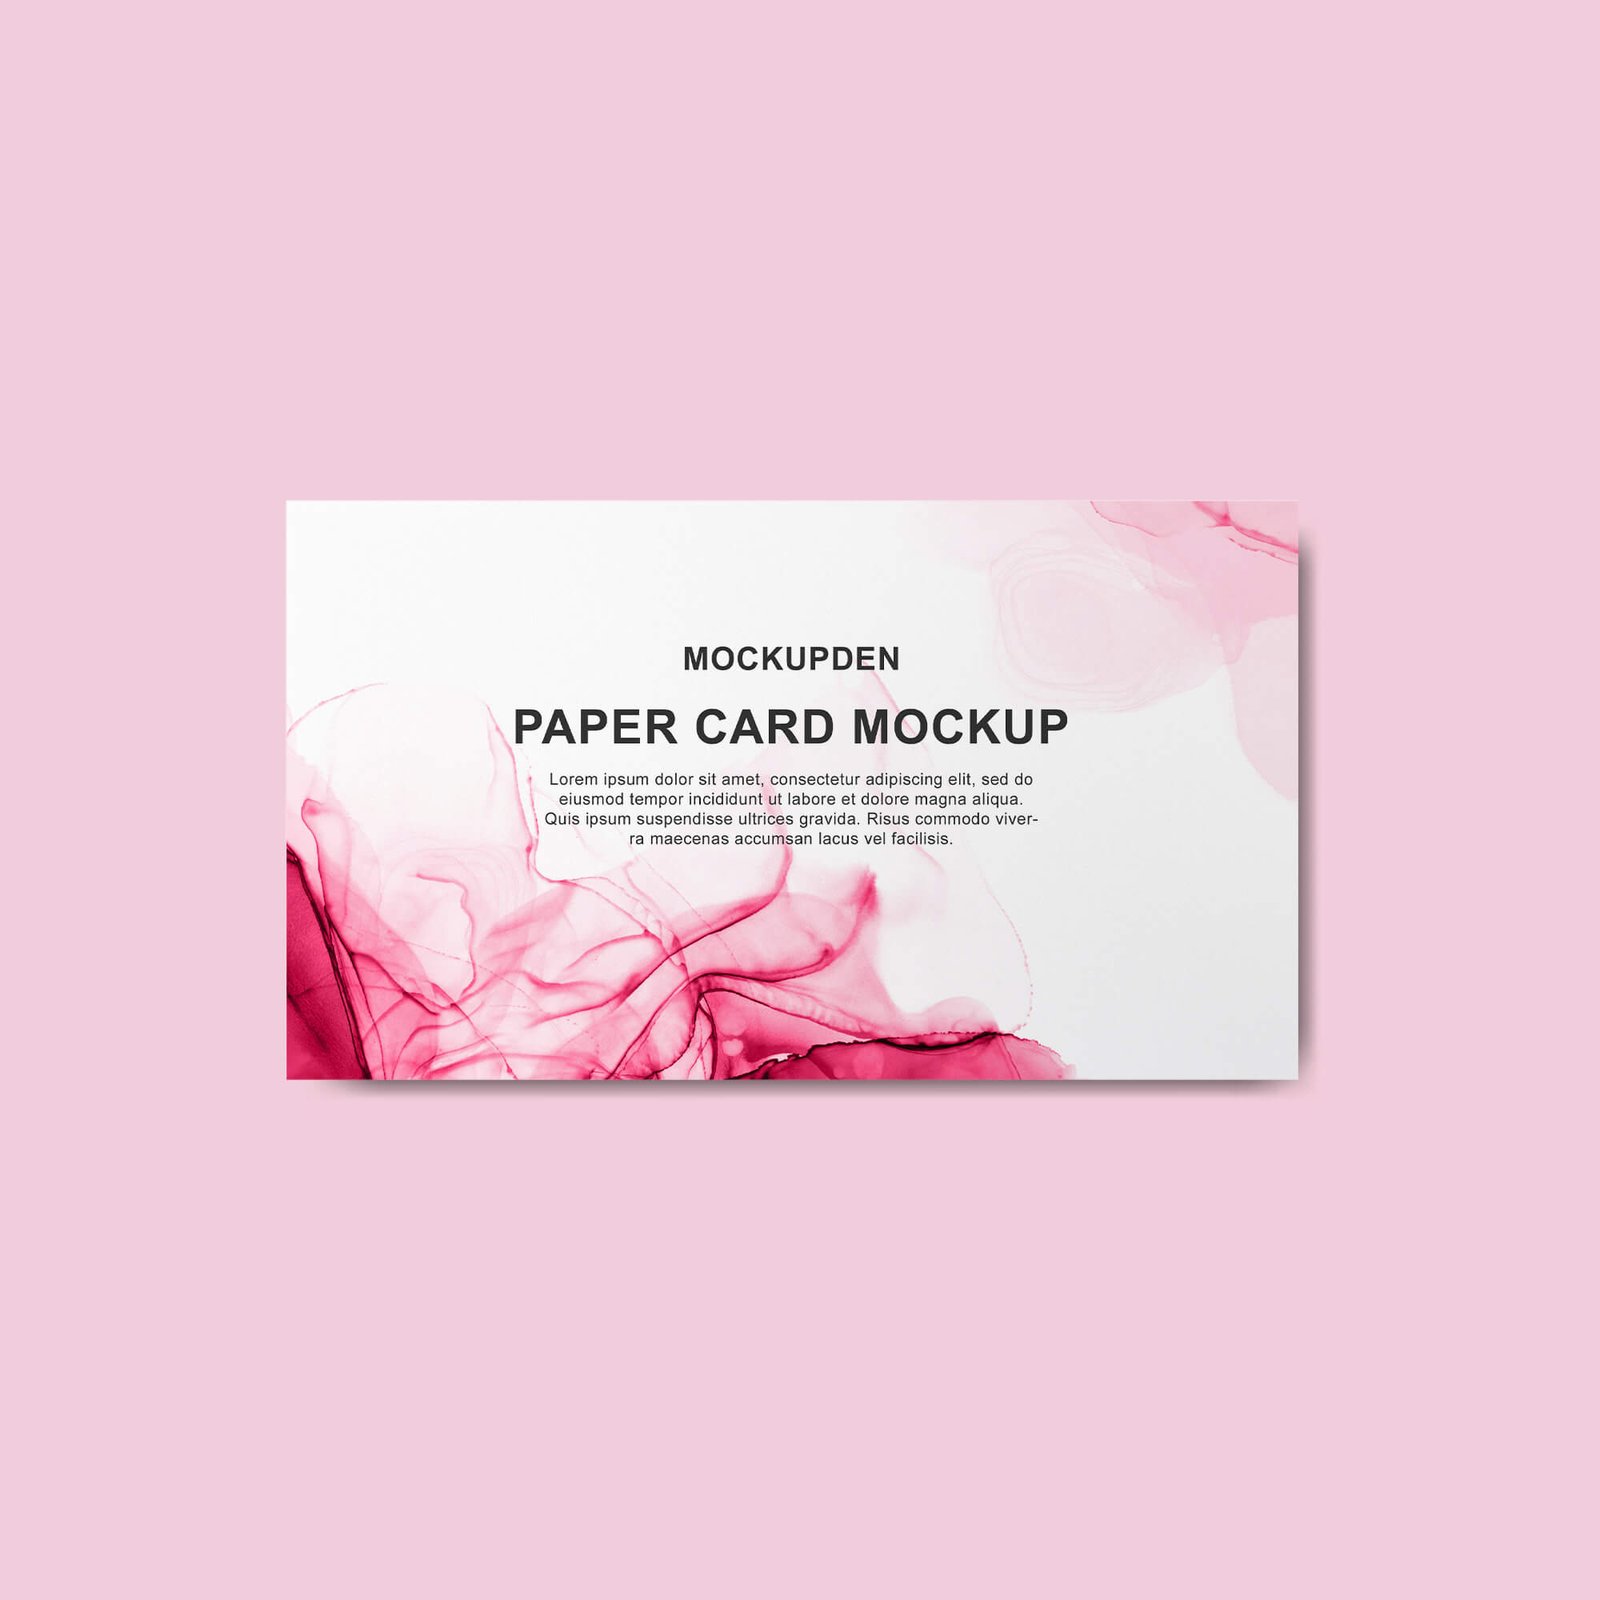 Design Free Paper Card Mockup PSD Template